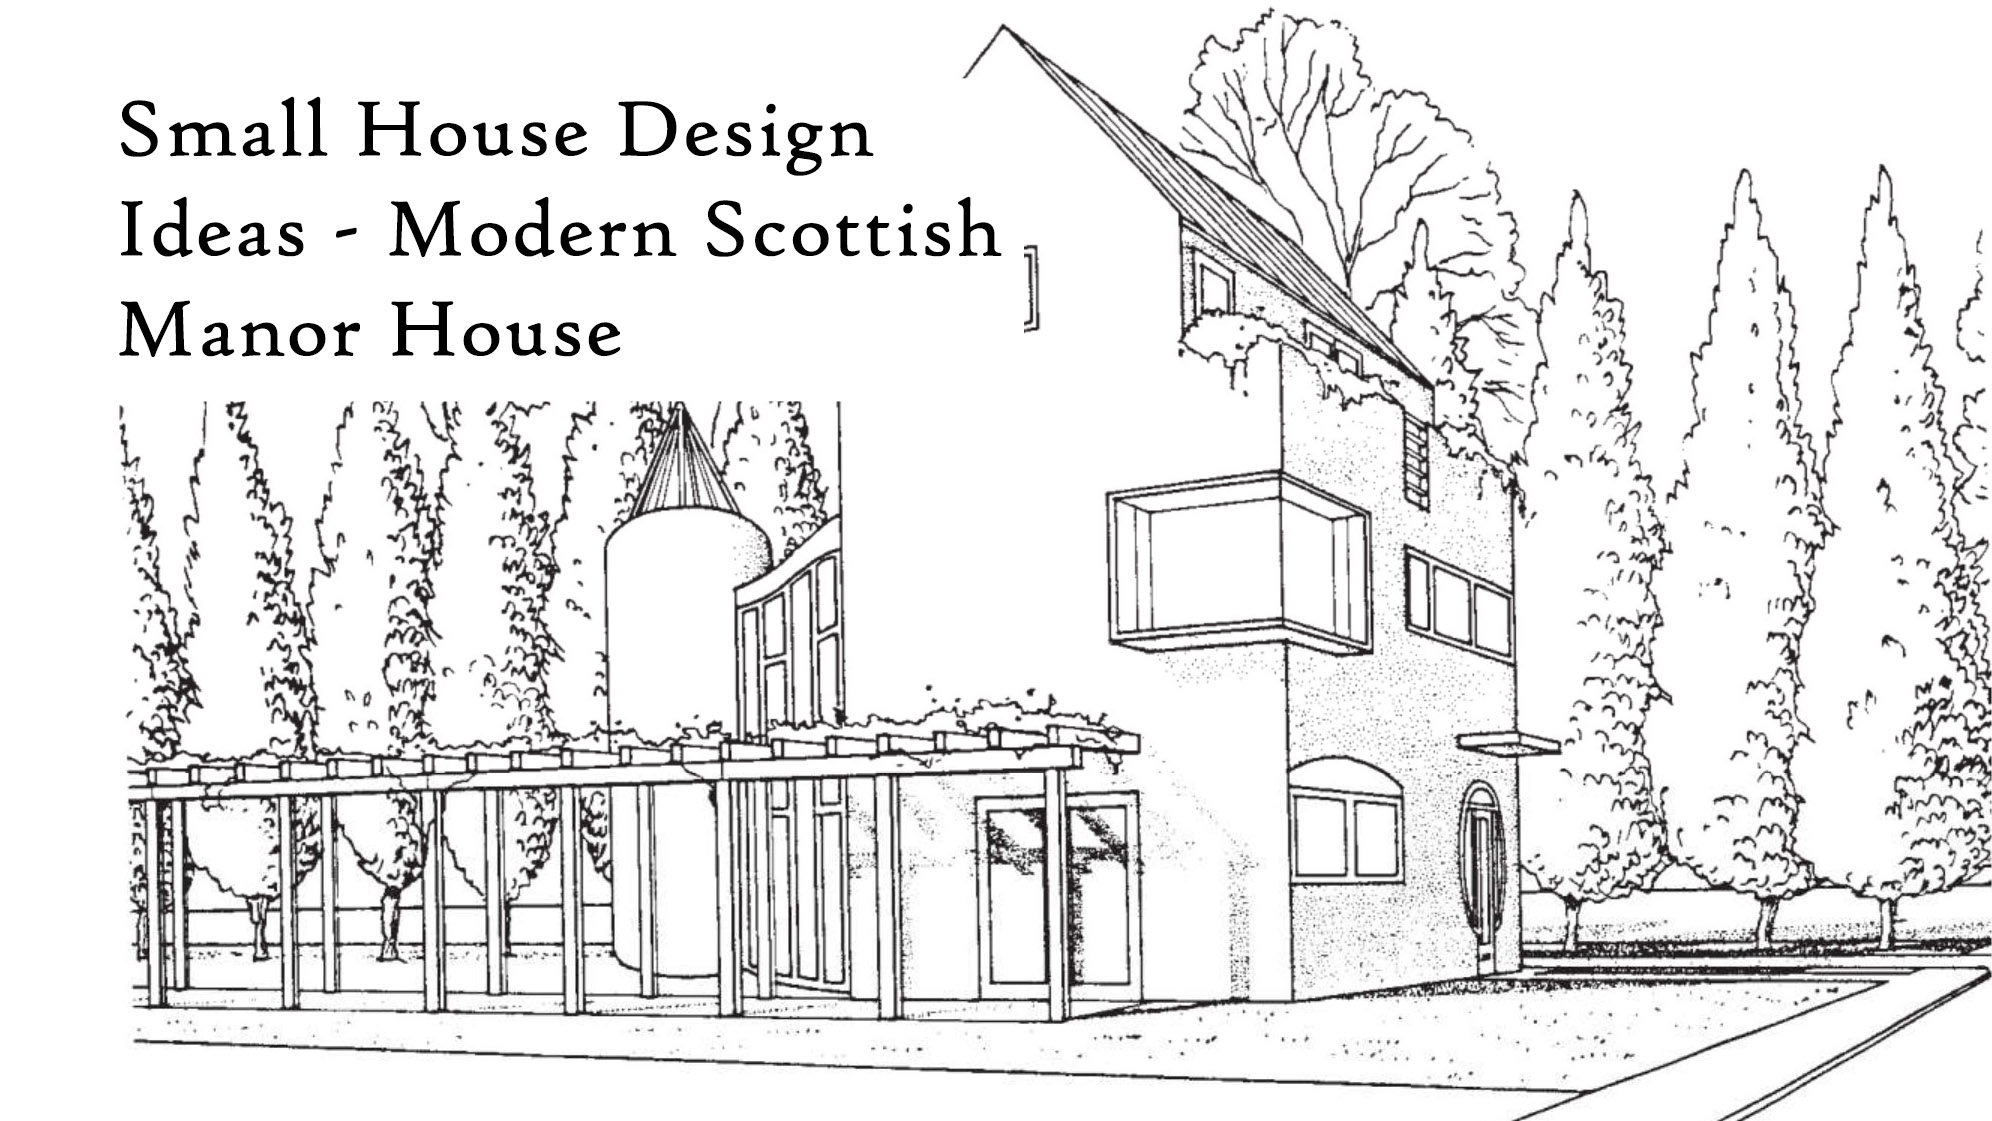 Small House Design Ideas - Modern Scottish Manor House